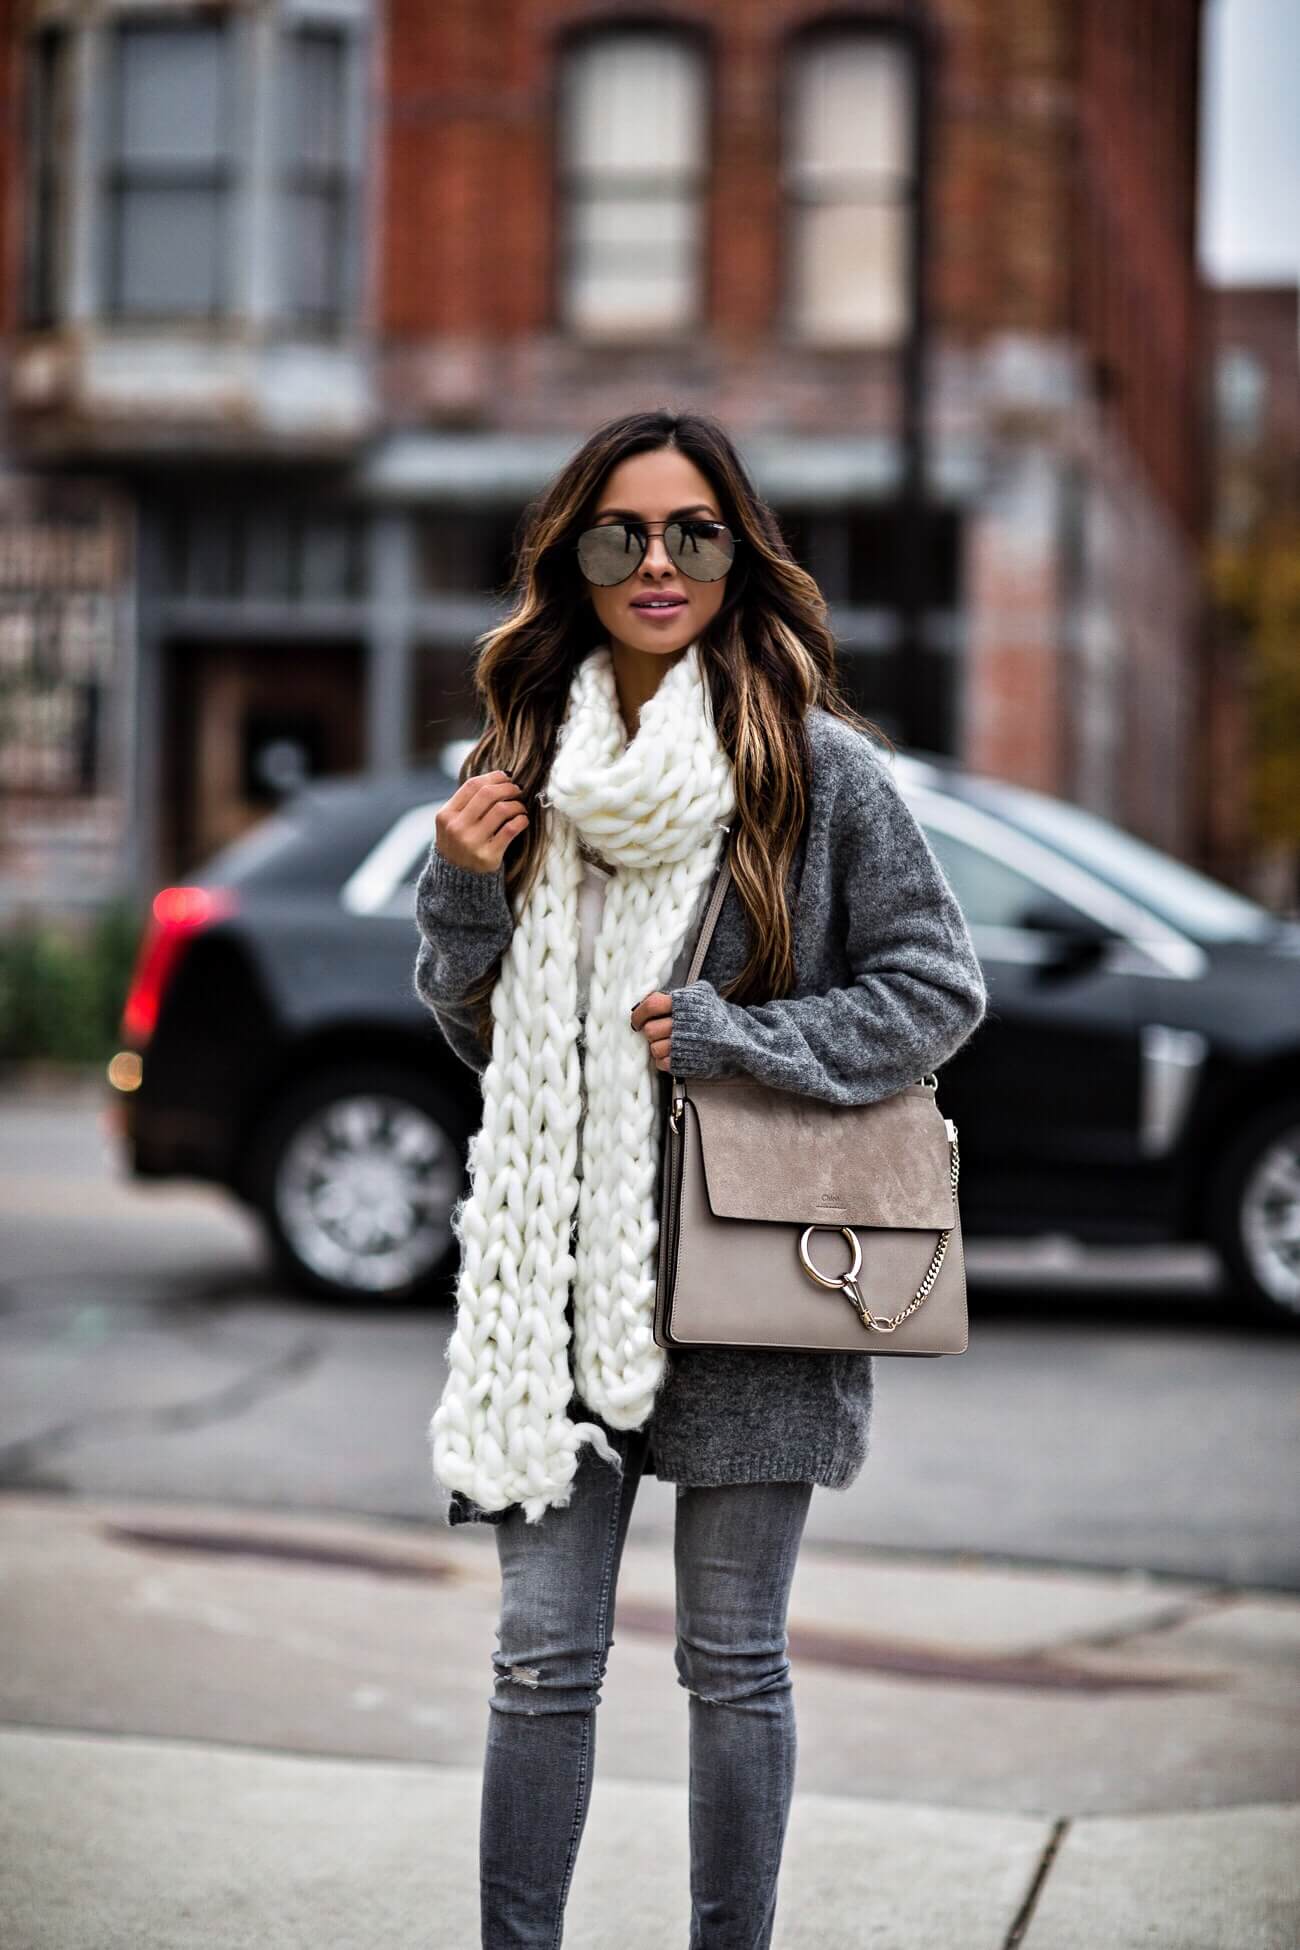 fashion blogger mia mia mine wearing a gray sweater from H&M